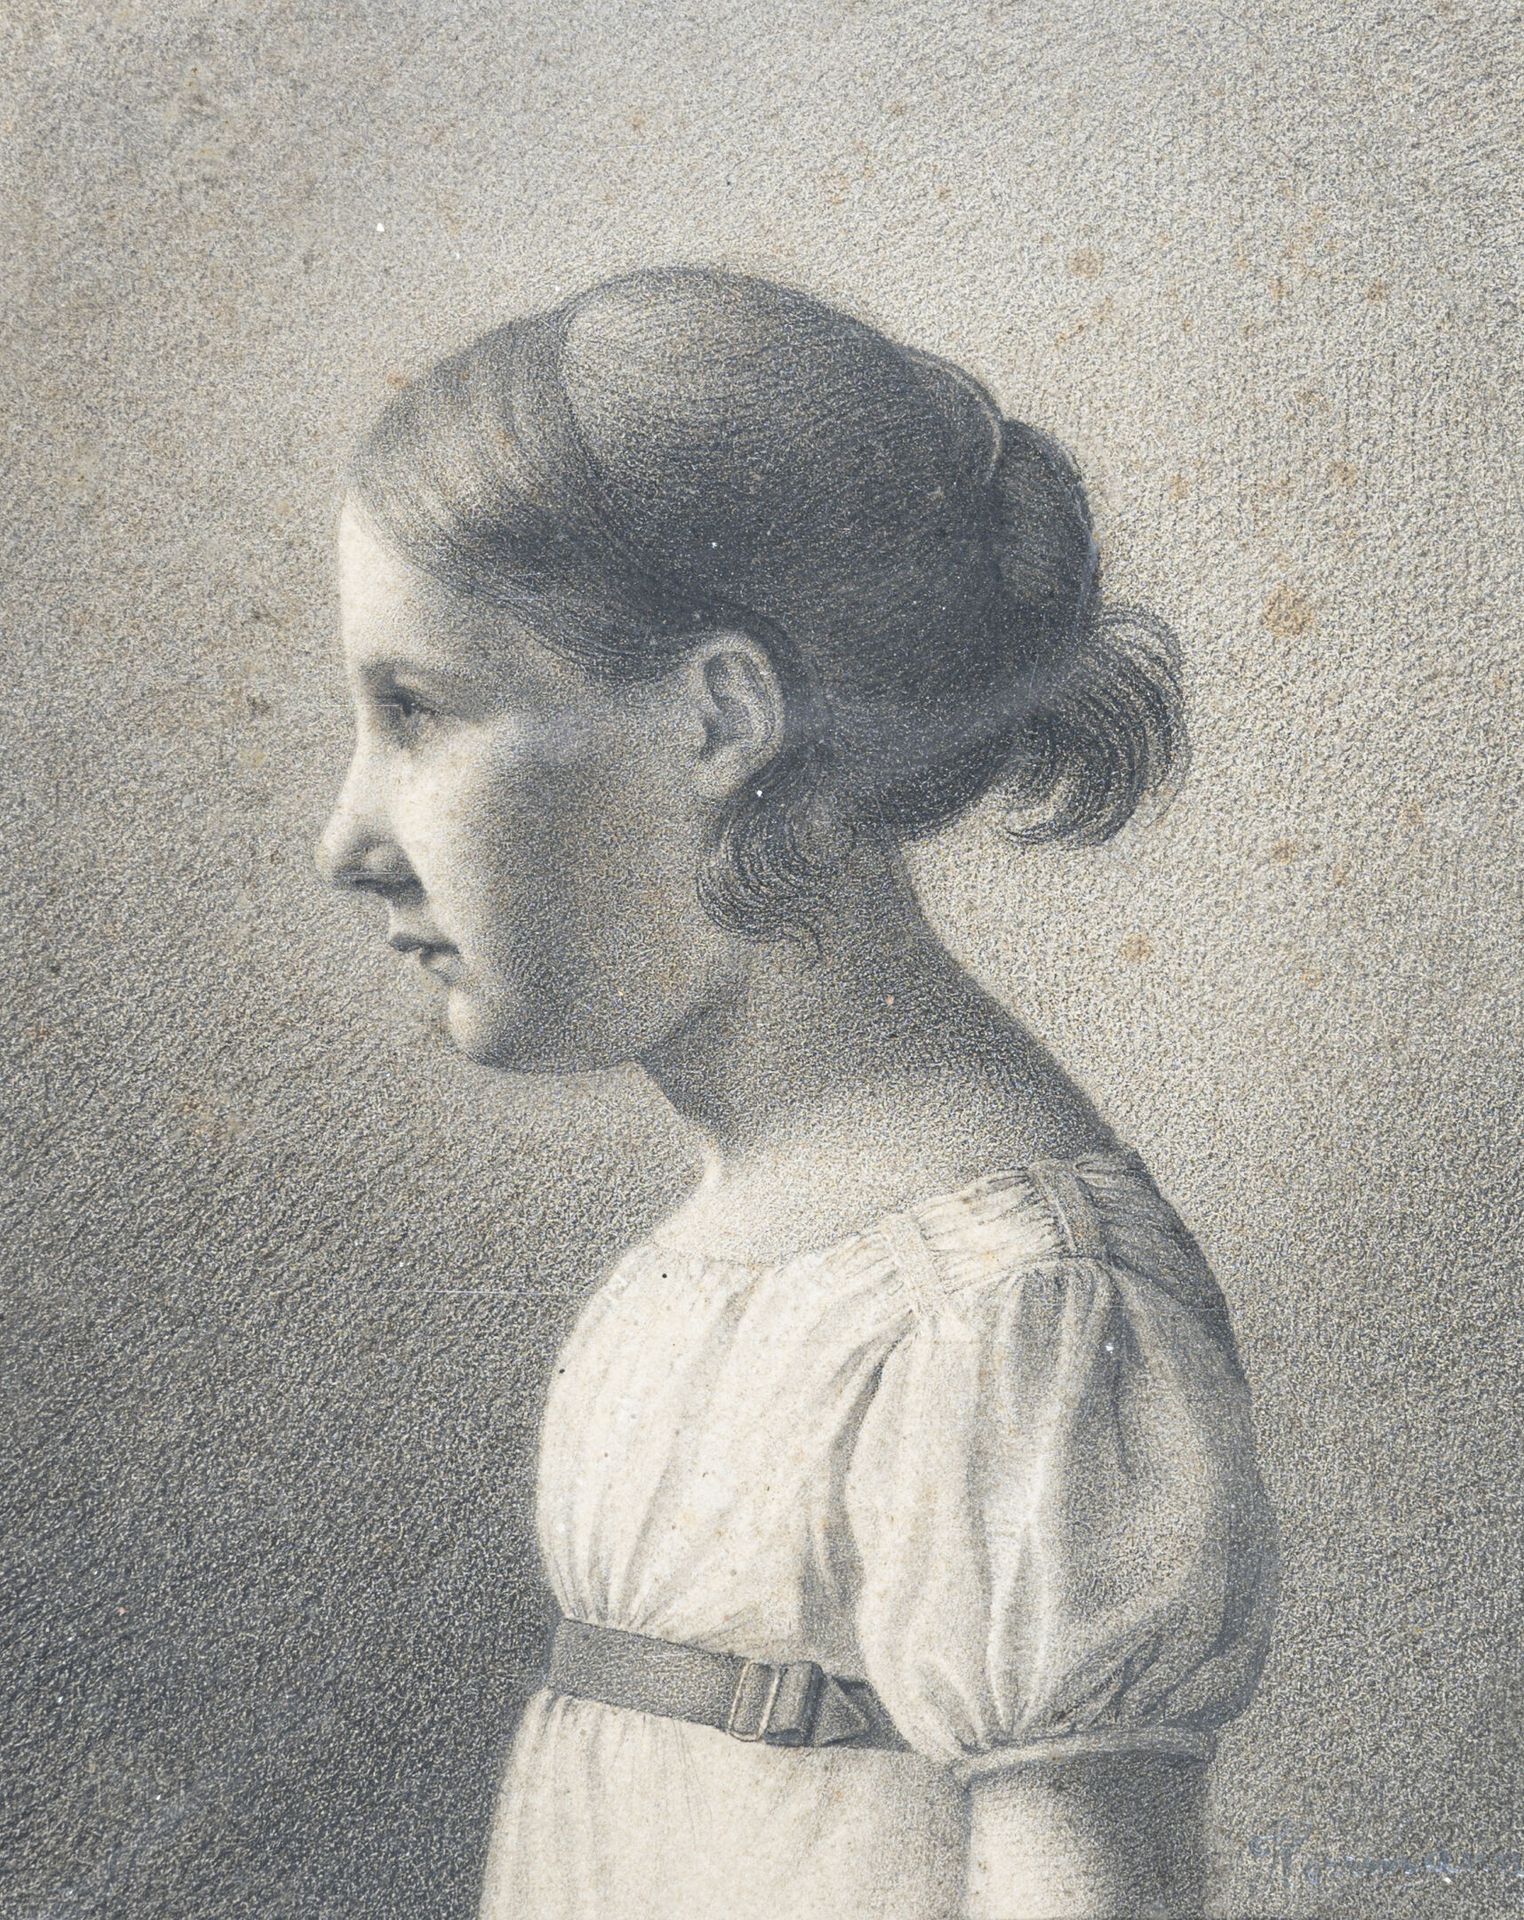 Null 汉斯-雅各布-奥里（1782-1868）的周围环境
穿着白色连衣裙的年轻女孩的侧面画像
黑色铅笔，树桩和白色高光，右下方有 "Herrmann "的题&hellip;